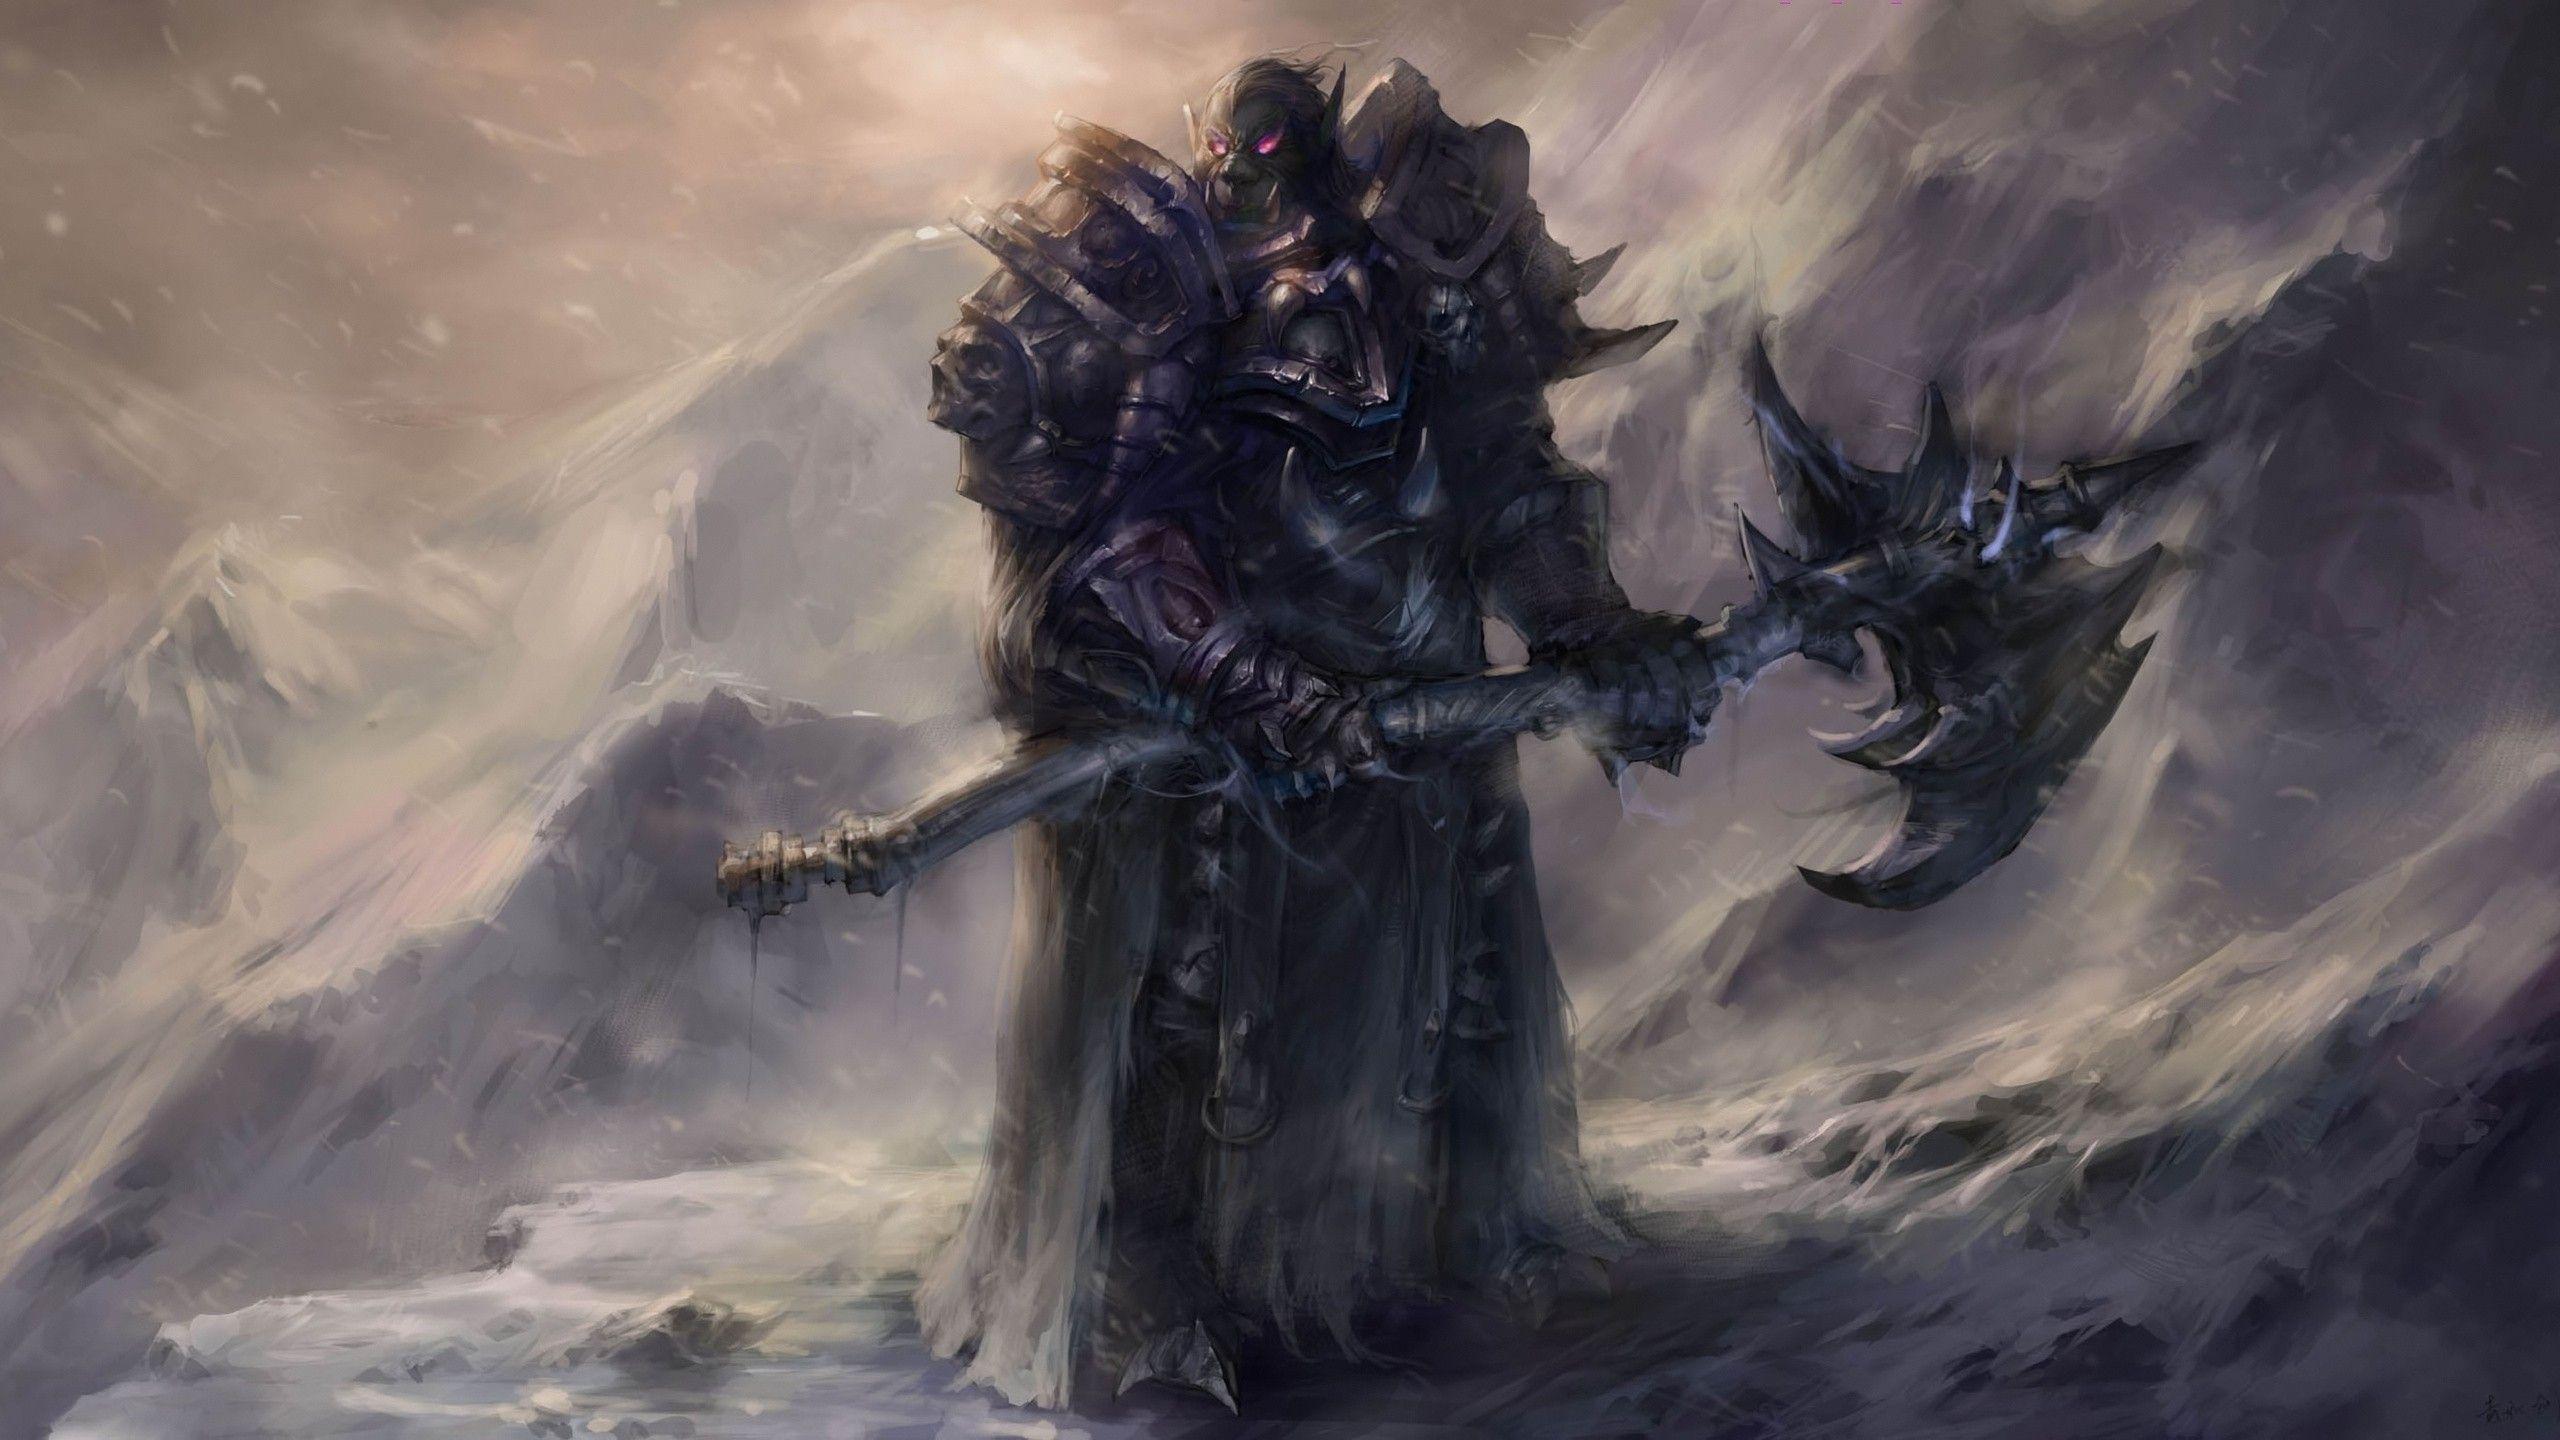 Video games world of warcraft fantasy art armor axes artwork